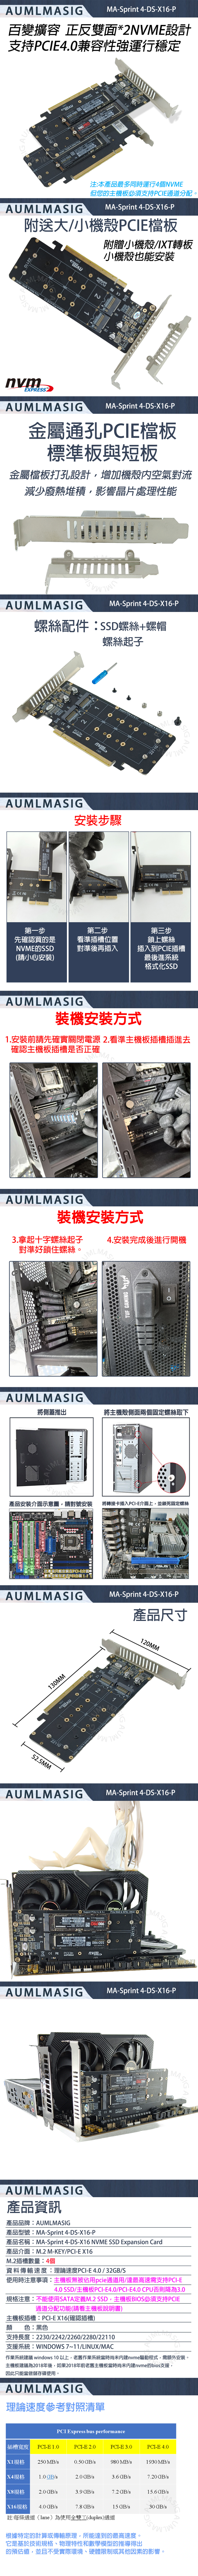 MIGMSprint 4DS6P百變擴容 正反雙面*NM設計支持E4兼容性強運行穩定 SSD 980-V-NND SSD 980UML注本產品最多同時運行4NVME但您的主機板必須支持IE通道分配MA-Sprint 4-DS-X6-P附送大小機殼IE檔板210附贈小機殼/IXT轉板小機殼也能12EXPSSAUMLMA-Sprint 4-DS-X16-P金屬通孔E檔板標準板與短板金屬檔板打孔設計增加機殼空氣對流減少廢熱堆積影響晶片處理性能AUMLMASIGMA-Sprint 4-DS-X16-P螺絲配件:SSD螺絲+螺帽螺絲起子 2EXPRESSupport    PCle RAID & INTEL VRCAUMLMASIG安裝步驟22110MASSSD 980 A  0X  C SIGAUMSAMSUNG第一步先確認買的是(請小心安裝)第二步NVME SSD看準插槽位置對準後再插入第三步鎖上螺絲插入到PCIE插槽最後進系統格式化SSDAUMLMASIG裝機安裝方式1安裝前請先確實關閉電源2.看準主機板插槽插進去確認主機板插槽是否正確1AUMLMASIG裝機安裝方式3.拿起十字螺絲起子對準好鎖住螺絲4.安裝完成後進行開機UML MAS -F TUF GAMINGAUMLMASIG將側蓋推出將主機殼側面兩個固定螺絲取下AUMUML產品安裝示意圖,請對號安裝 將轉接卡插入PCI-E介面上,並鎖死固定螺絲安裝,此產品只能安装在PCI-E介面口嚴禁安装在老式 PC介面 1.AUMLMASIG130MMદર。2211052.5MM MA-Sprint 4-DS-X16-P產品尺寸Support PCle 4.x &/PCle RAID & INTEL 120MMAUMLMASIG MA-Sprint 4-DS-X16-P Support PCle 4.x & 3.x PCle RAID & INTEL   1 -A122422 A    -A FCEXPRESSnvm.AUMLMASIG22110MASIGMA-Sprint 4-DS-X16-PSupport PCle  & PC RAID&INTEL VROC 086  -ASSD9802CE RE EXPRESSPCI2325 OASIGAAUMLMASIG產品資訊產品品牌:AUMLMASIG產品型號:MA-Sprint 4-DS-X16-P產品名稱:MA-Sprint 4-DS-X16 NVME SSD Expanion Card產品介面:M.2 M-KEY/PCI-EM.2插槽數量:4個X16資料傳輸速度:理論速度PCI-E4.0/32GB/S使用時注意事項:主機板無被佔用pcie通道用/達最高速需支持PCI-E4.0 SSD/主機板PCI-E4.0/PCI-E4.0 CPU否則降為3.0SSD,主機板BIOS必須支持PCIE能使用SATA定義M.2規格注意:不通道分配功能(請看主機板說明書)主機板插槽:PCI-E X16(確認插槽)顔色:黑色支持長度:2230/2242/2260/2280/22110支援系統:WINDOWS 7~11/LINUX/MAC作業系統建議 windows 10 以上,老舊作業系統當時尚未nvme驅動程式,需額外安裝。主機板建議為2018年後,如果2018年前老舊主機板當時尚未内建nvme的bios支援,因此只能當做儲存碟使用。AUMLMASIG理論速度參考對照清單PCI Express bus performance|插槽寬度PCI-E 1.0PCI-E 2.0PCI-E 3.0PCI-E 4.00.50 GB/s980 MB/s1930MB/s1.0 GB/s2.0 GB/s3.6 GB/s7.20 GB/sX1規格 250 MB/s|X4規格X8規格 2.0 GB/s4.0 GB/s3.9 GB/s7.2 GB/s15.6GB/sMASIGX16規格7.8 GB/s15 GB/s註:每條通道(lane)為使用全雙工(duplex)通道JML30 GB/s根它據特定的計算或傳輸原理,所能達到的最高速度。SIG是基於技術規格、物理特性和數學模型的推導得出的預估,並且不受實際環境、硬體限制或其他因素的影響。